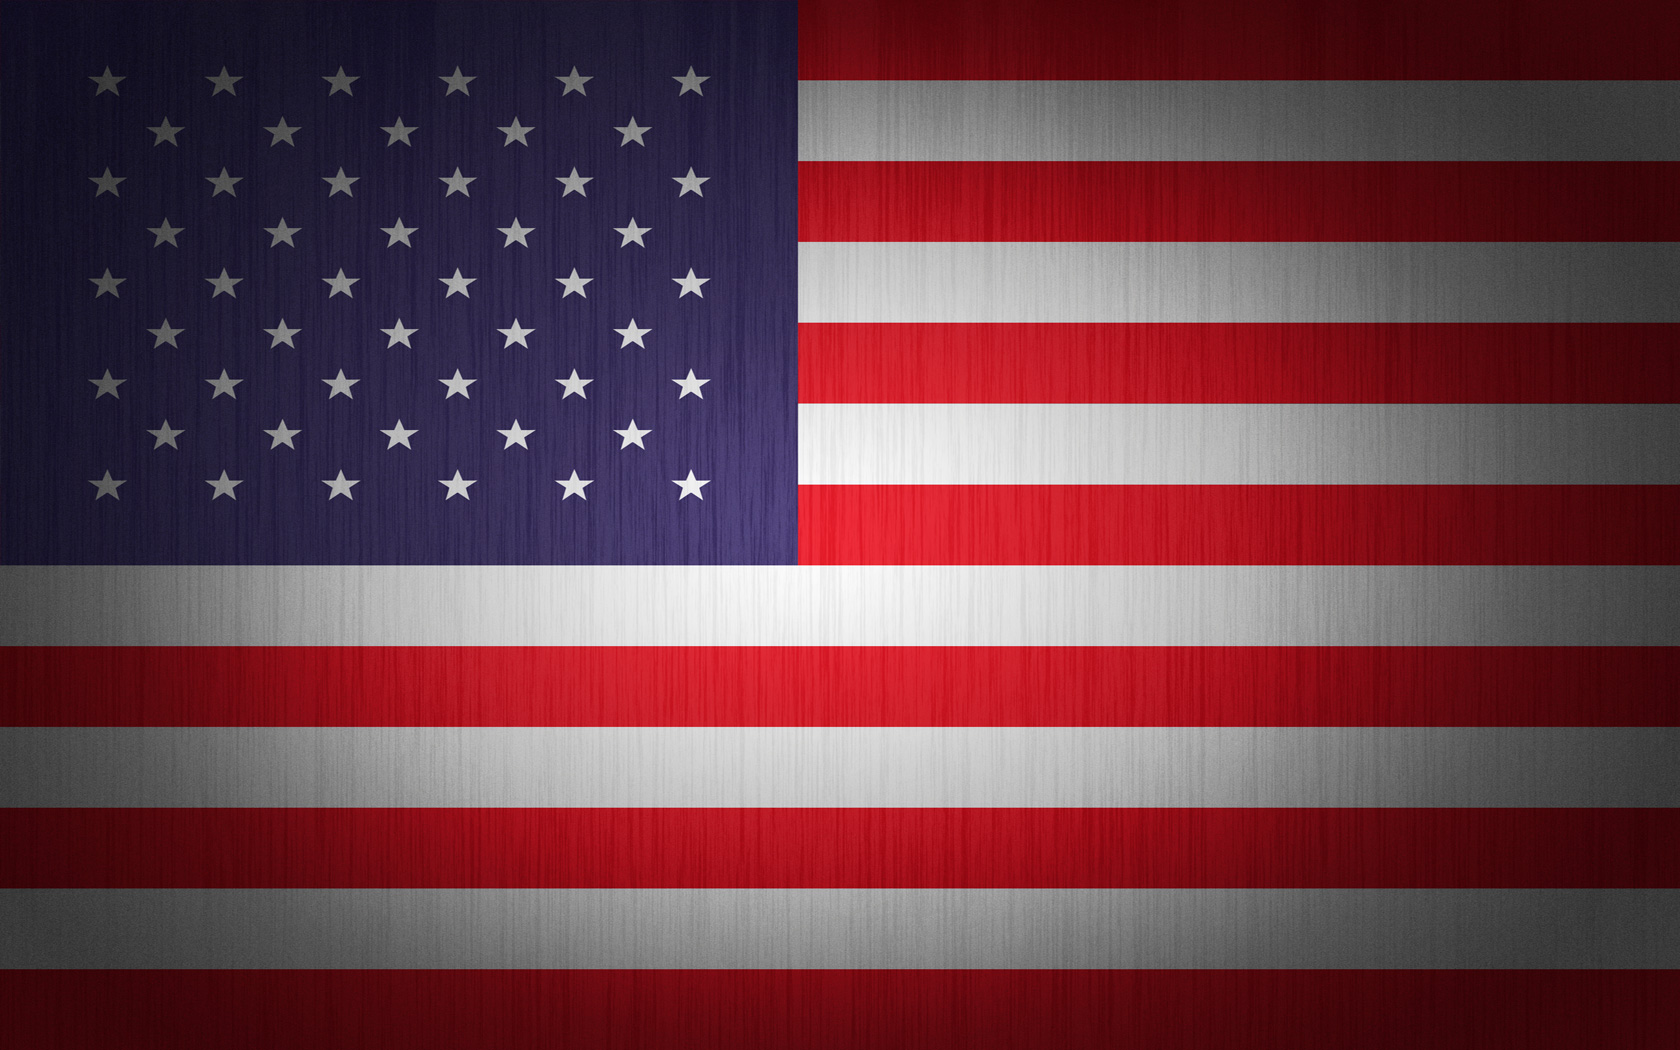 American flag wallpaper hd